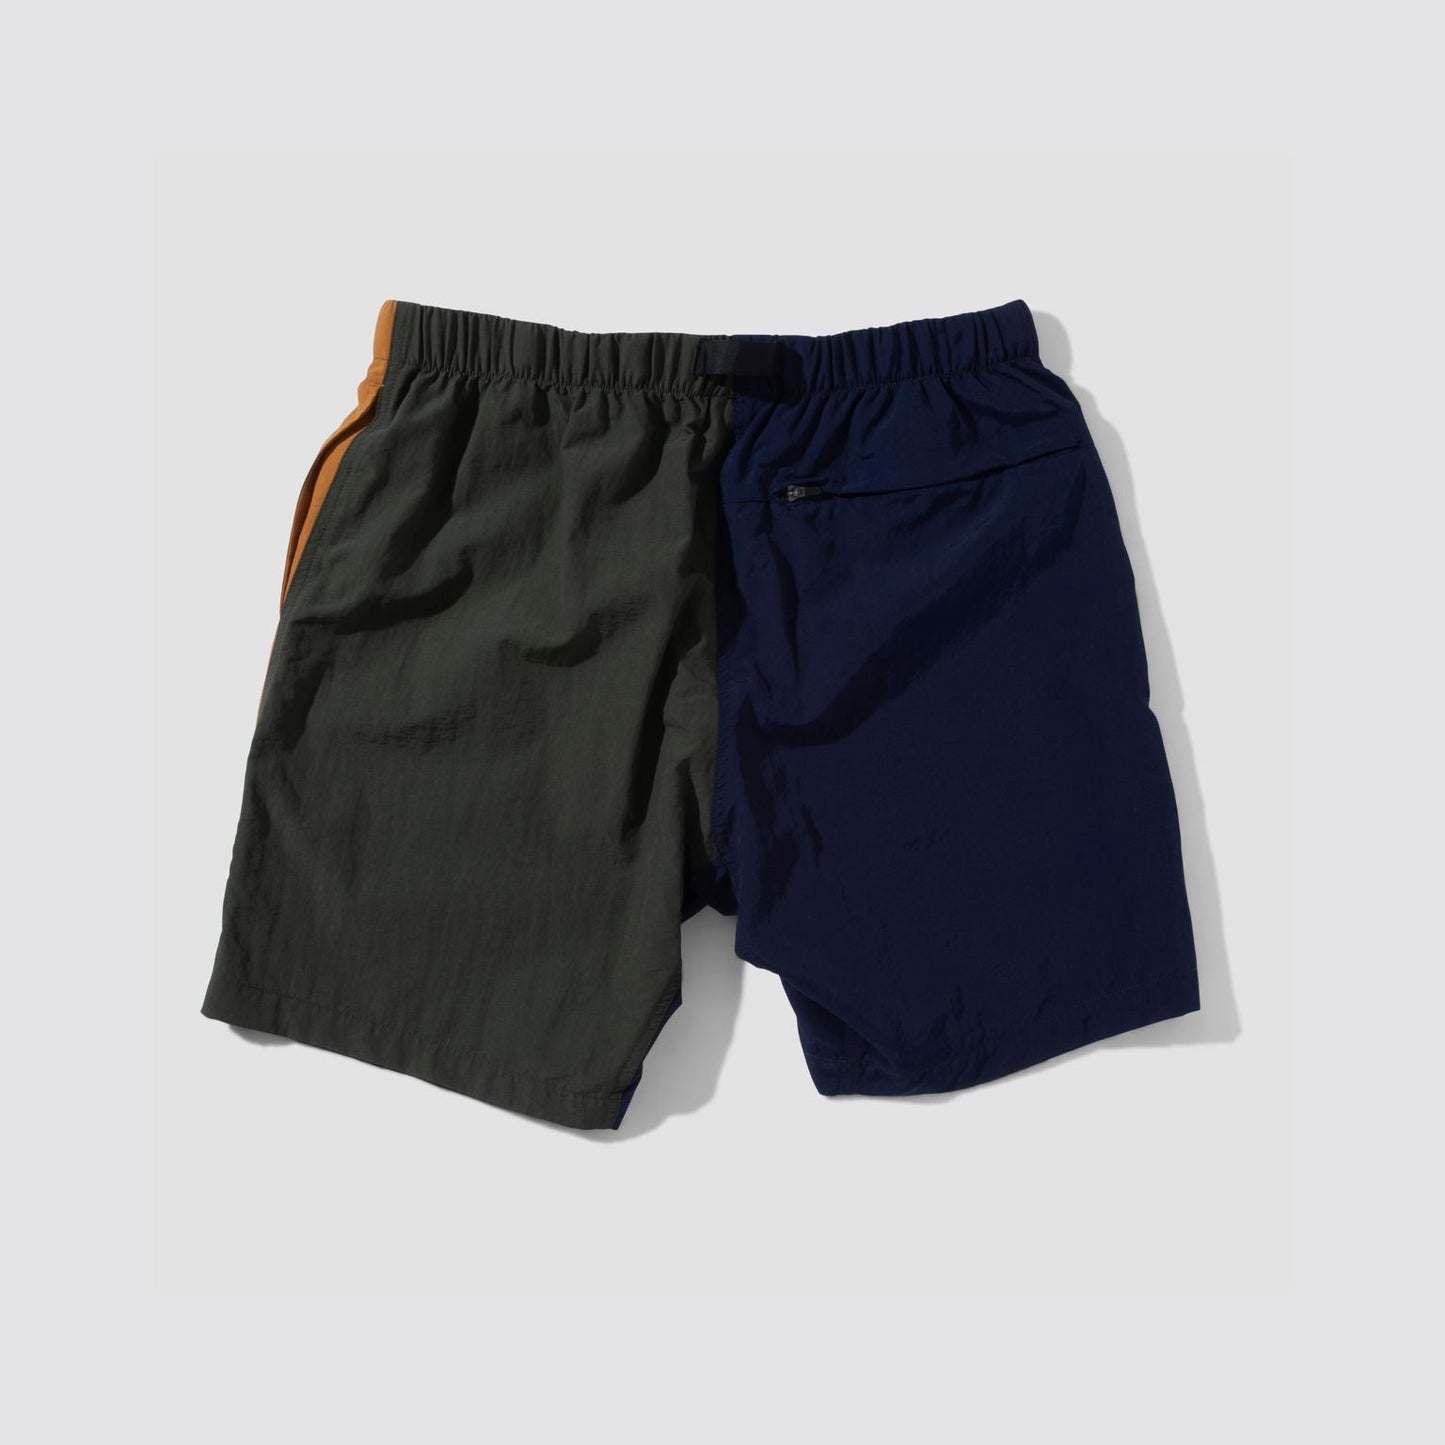 HUF Packable Tech Shorts - Multi Shorts - Mens